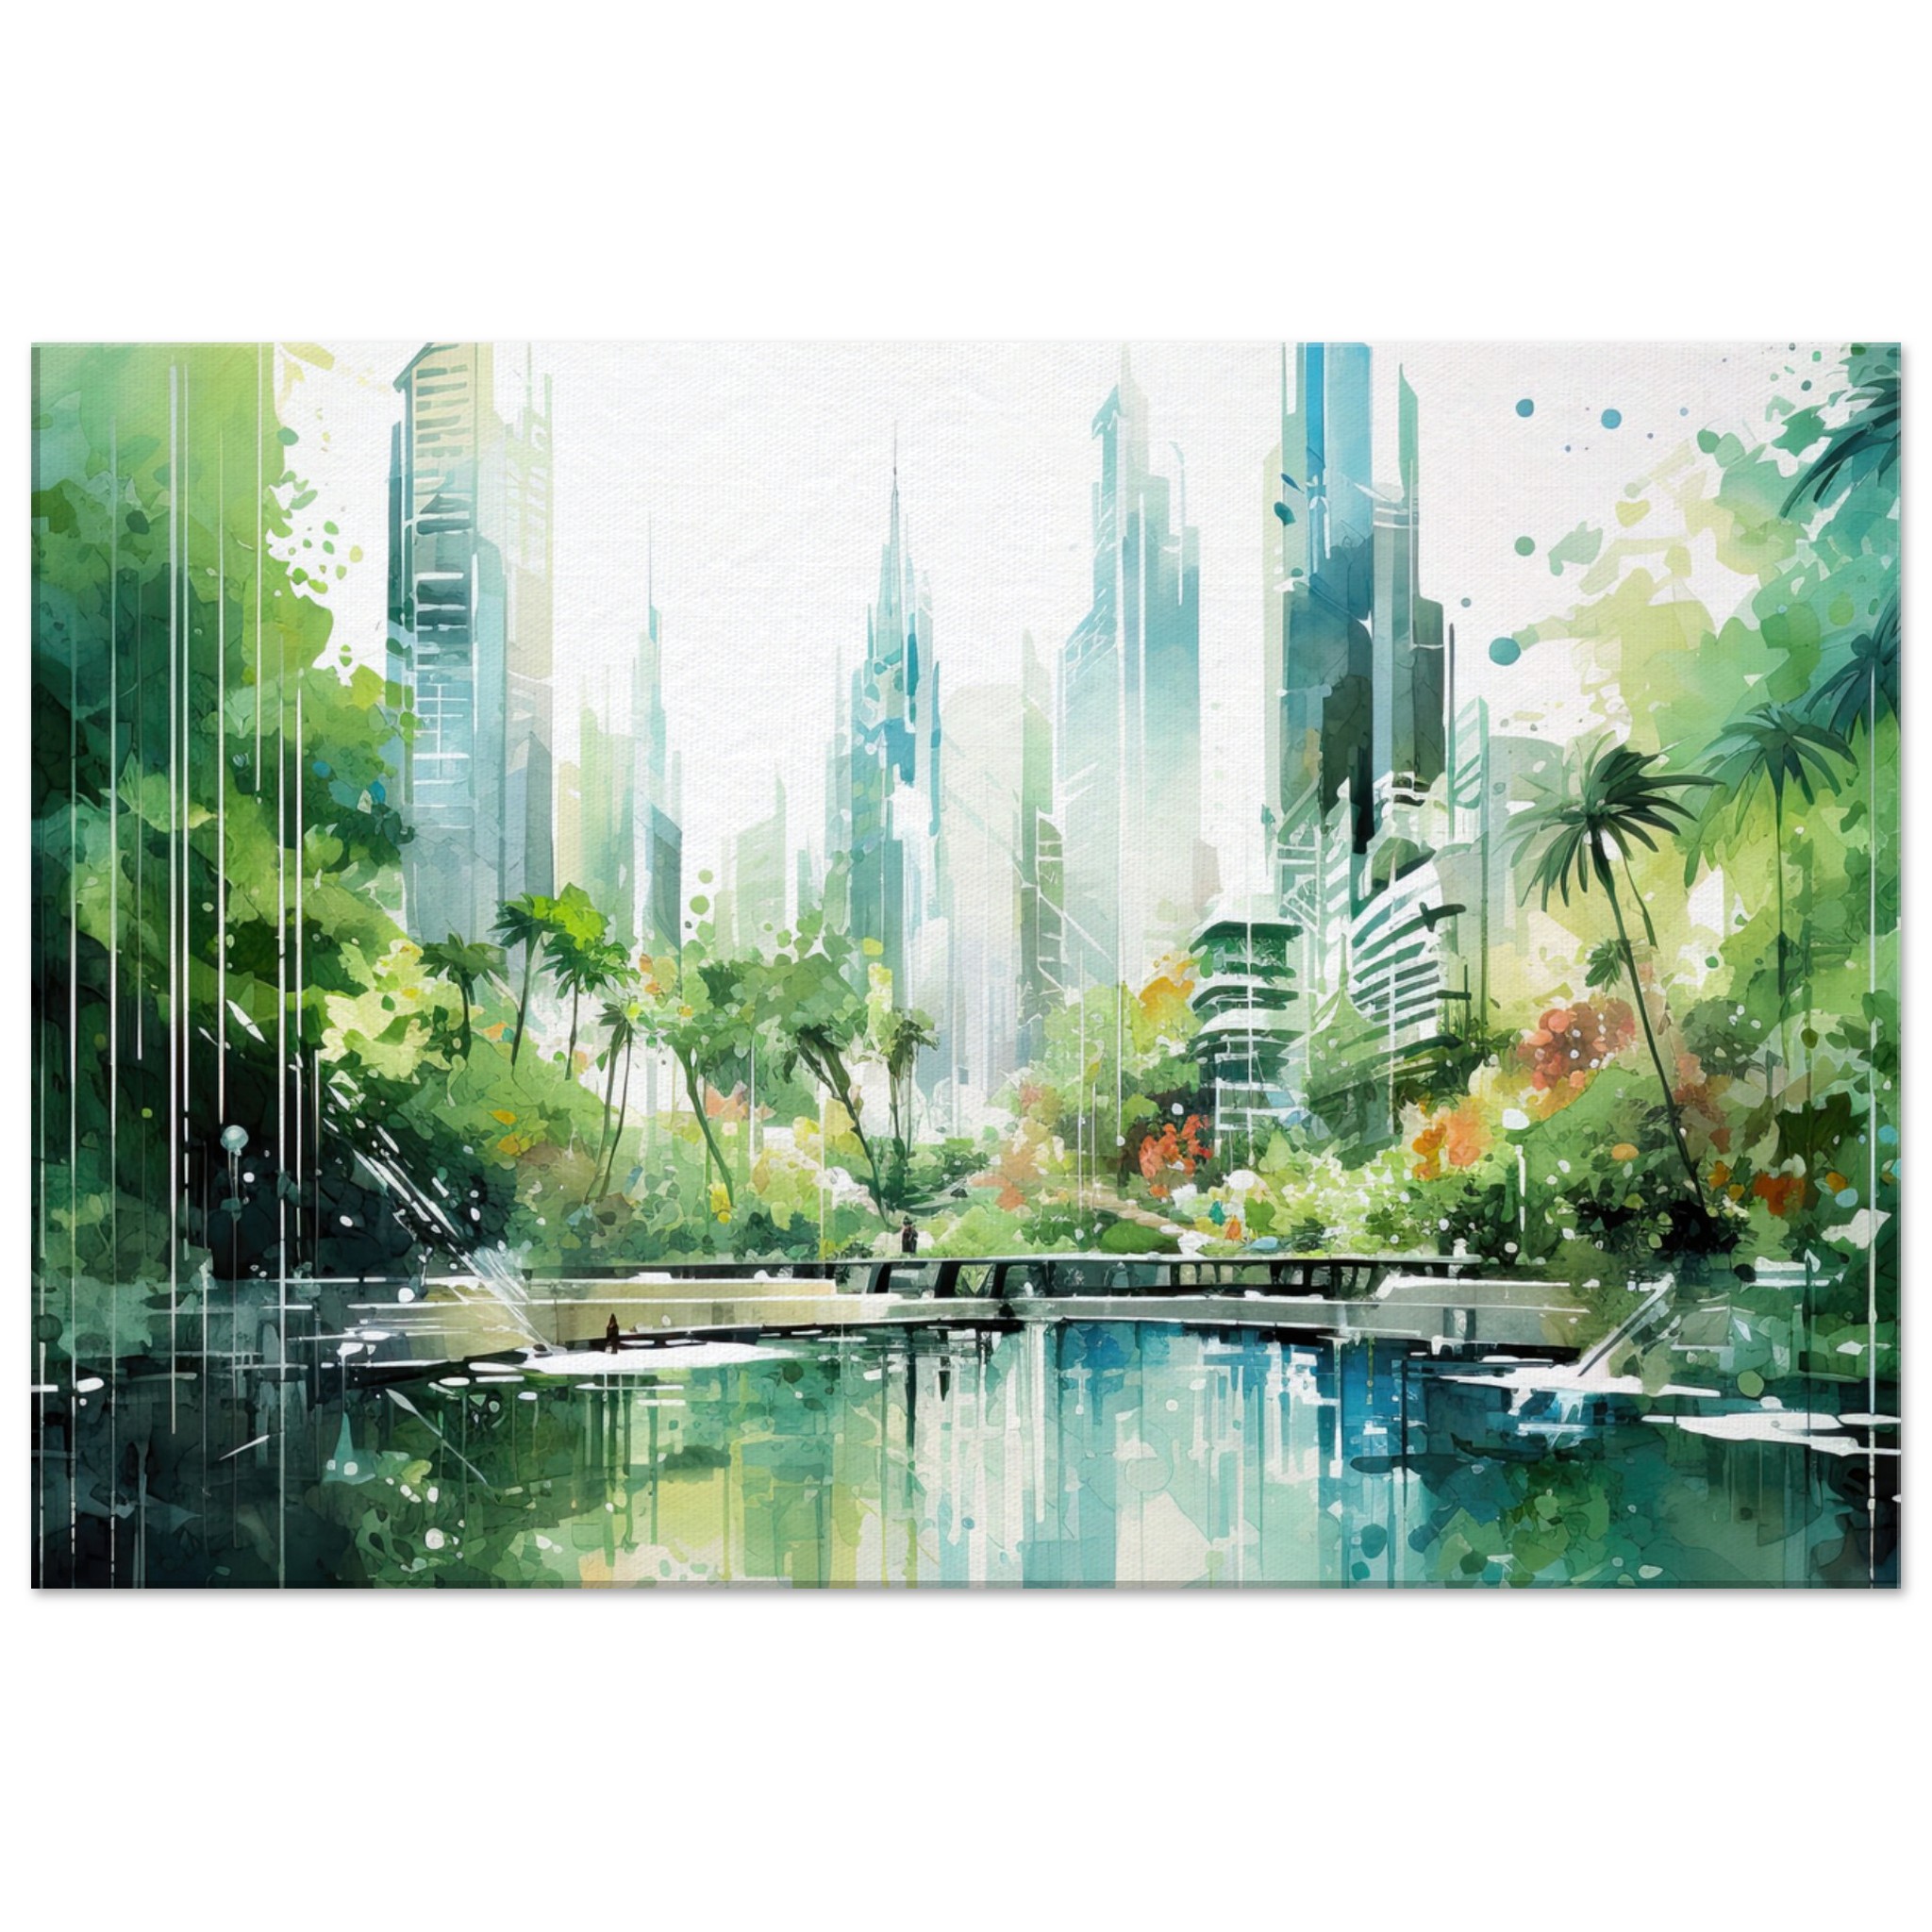 Rainy City Day Watercolor Canvas Print